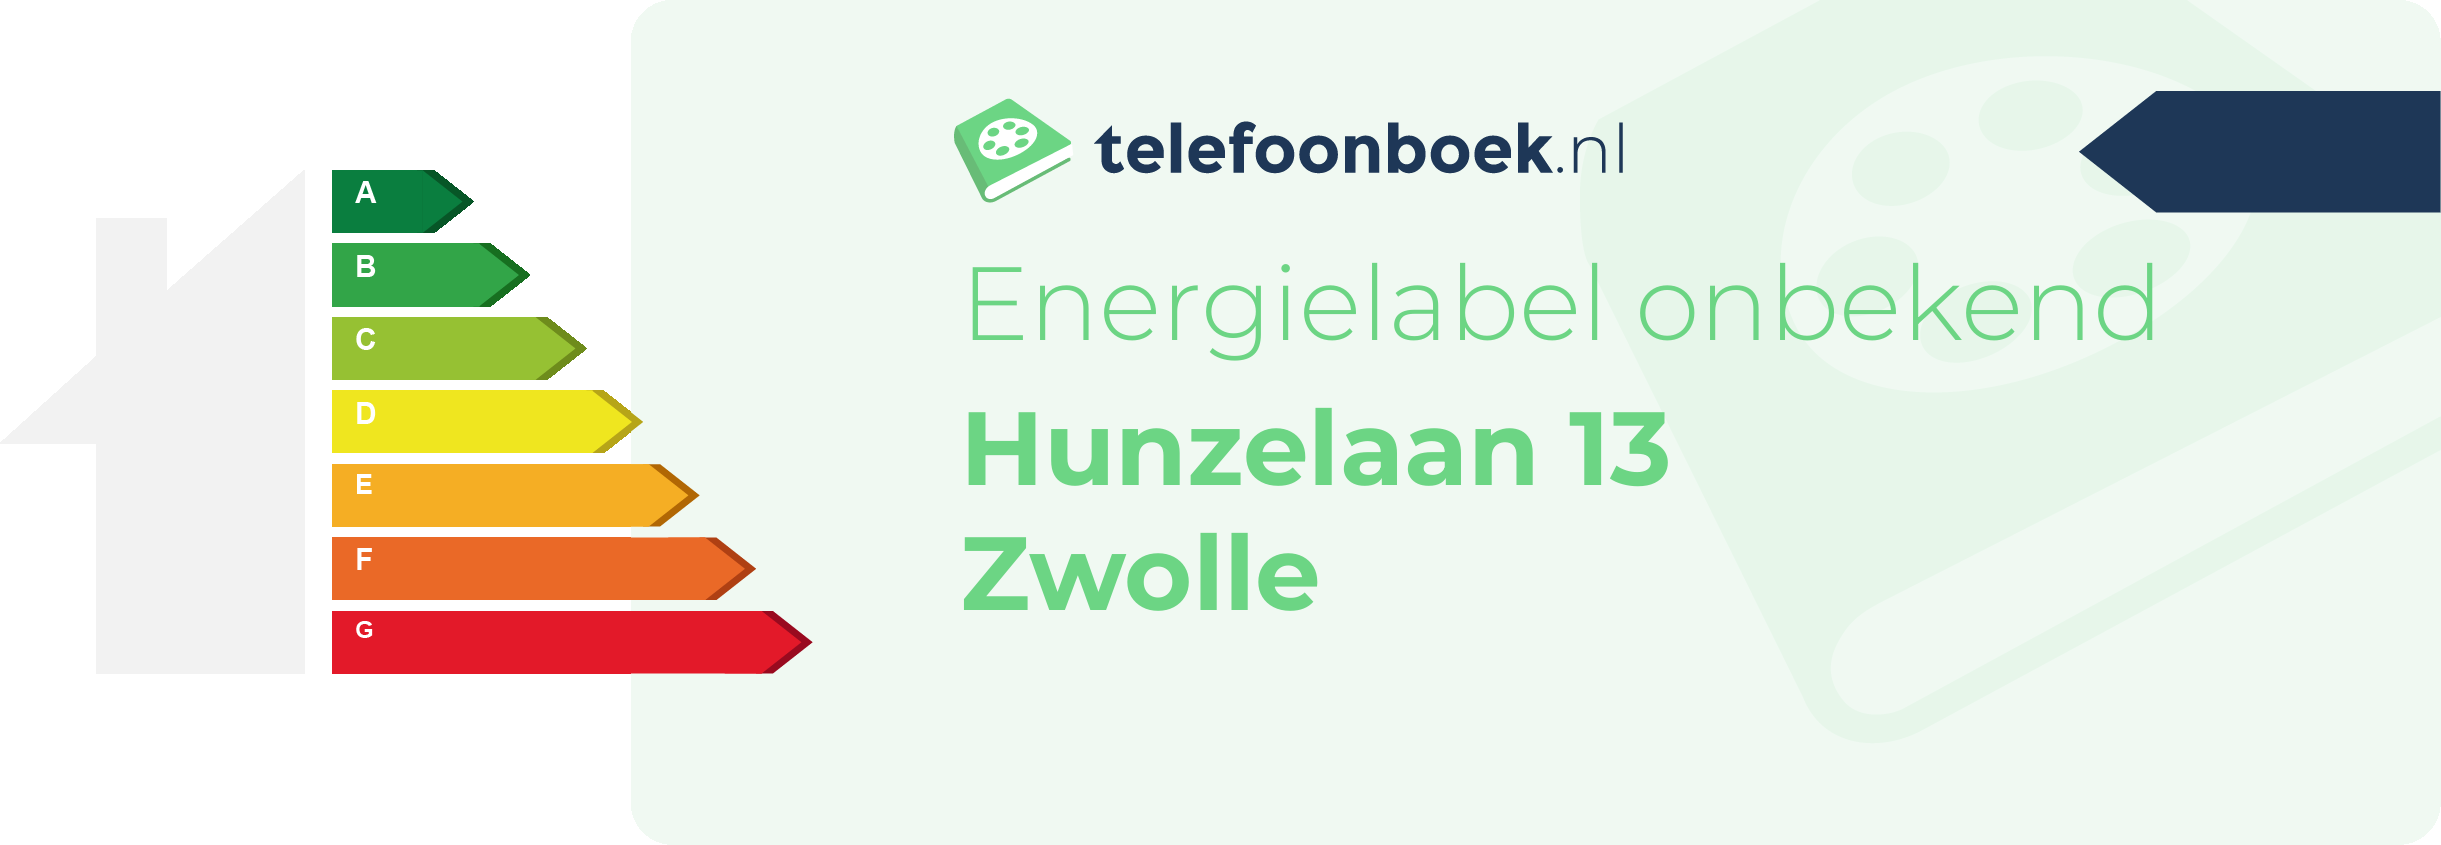 Energielabel Hunzelaan 13 Zwolle